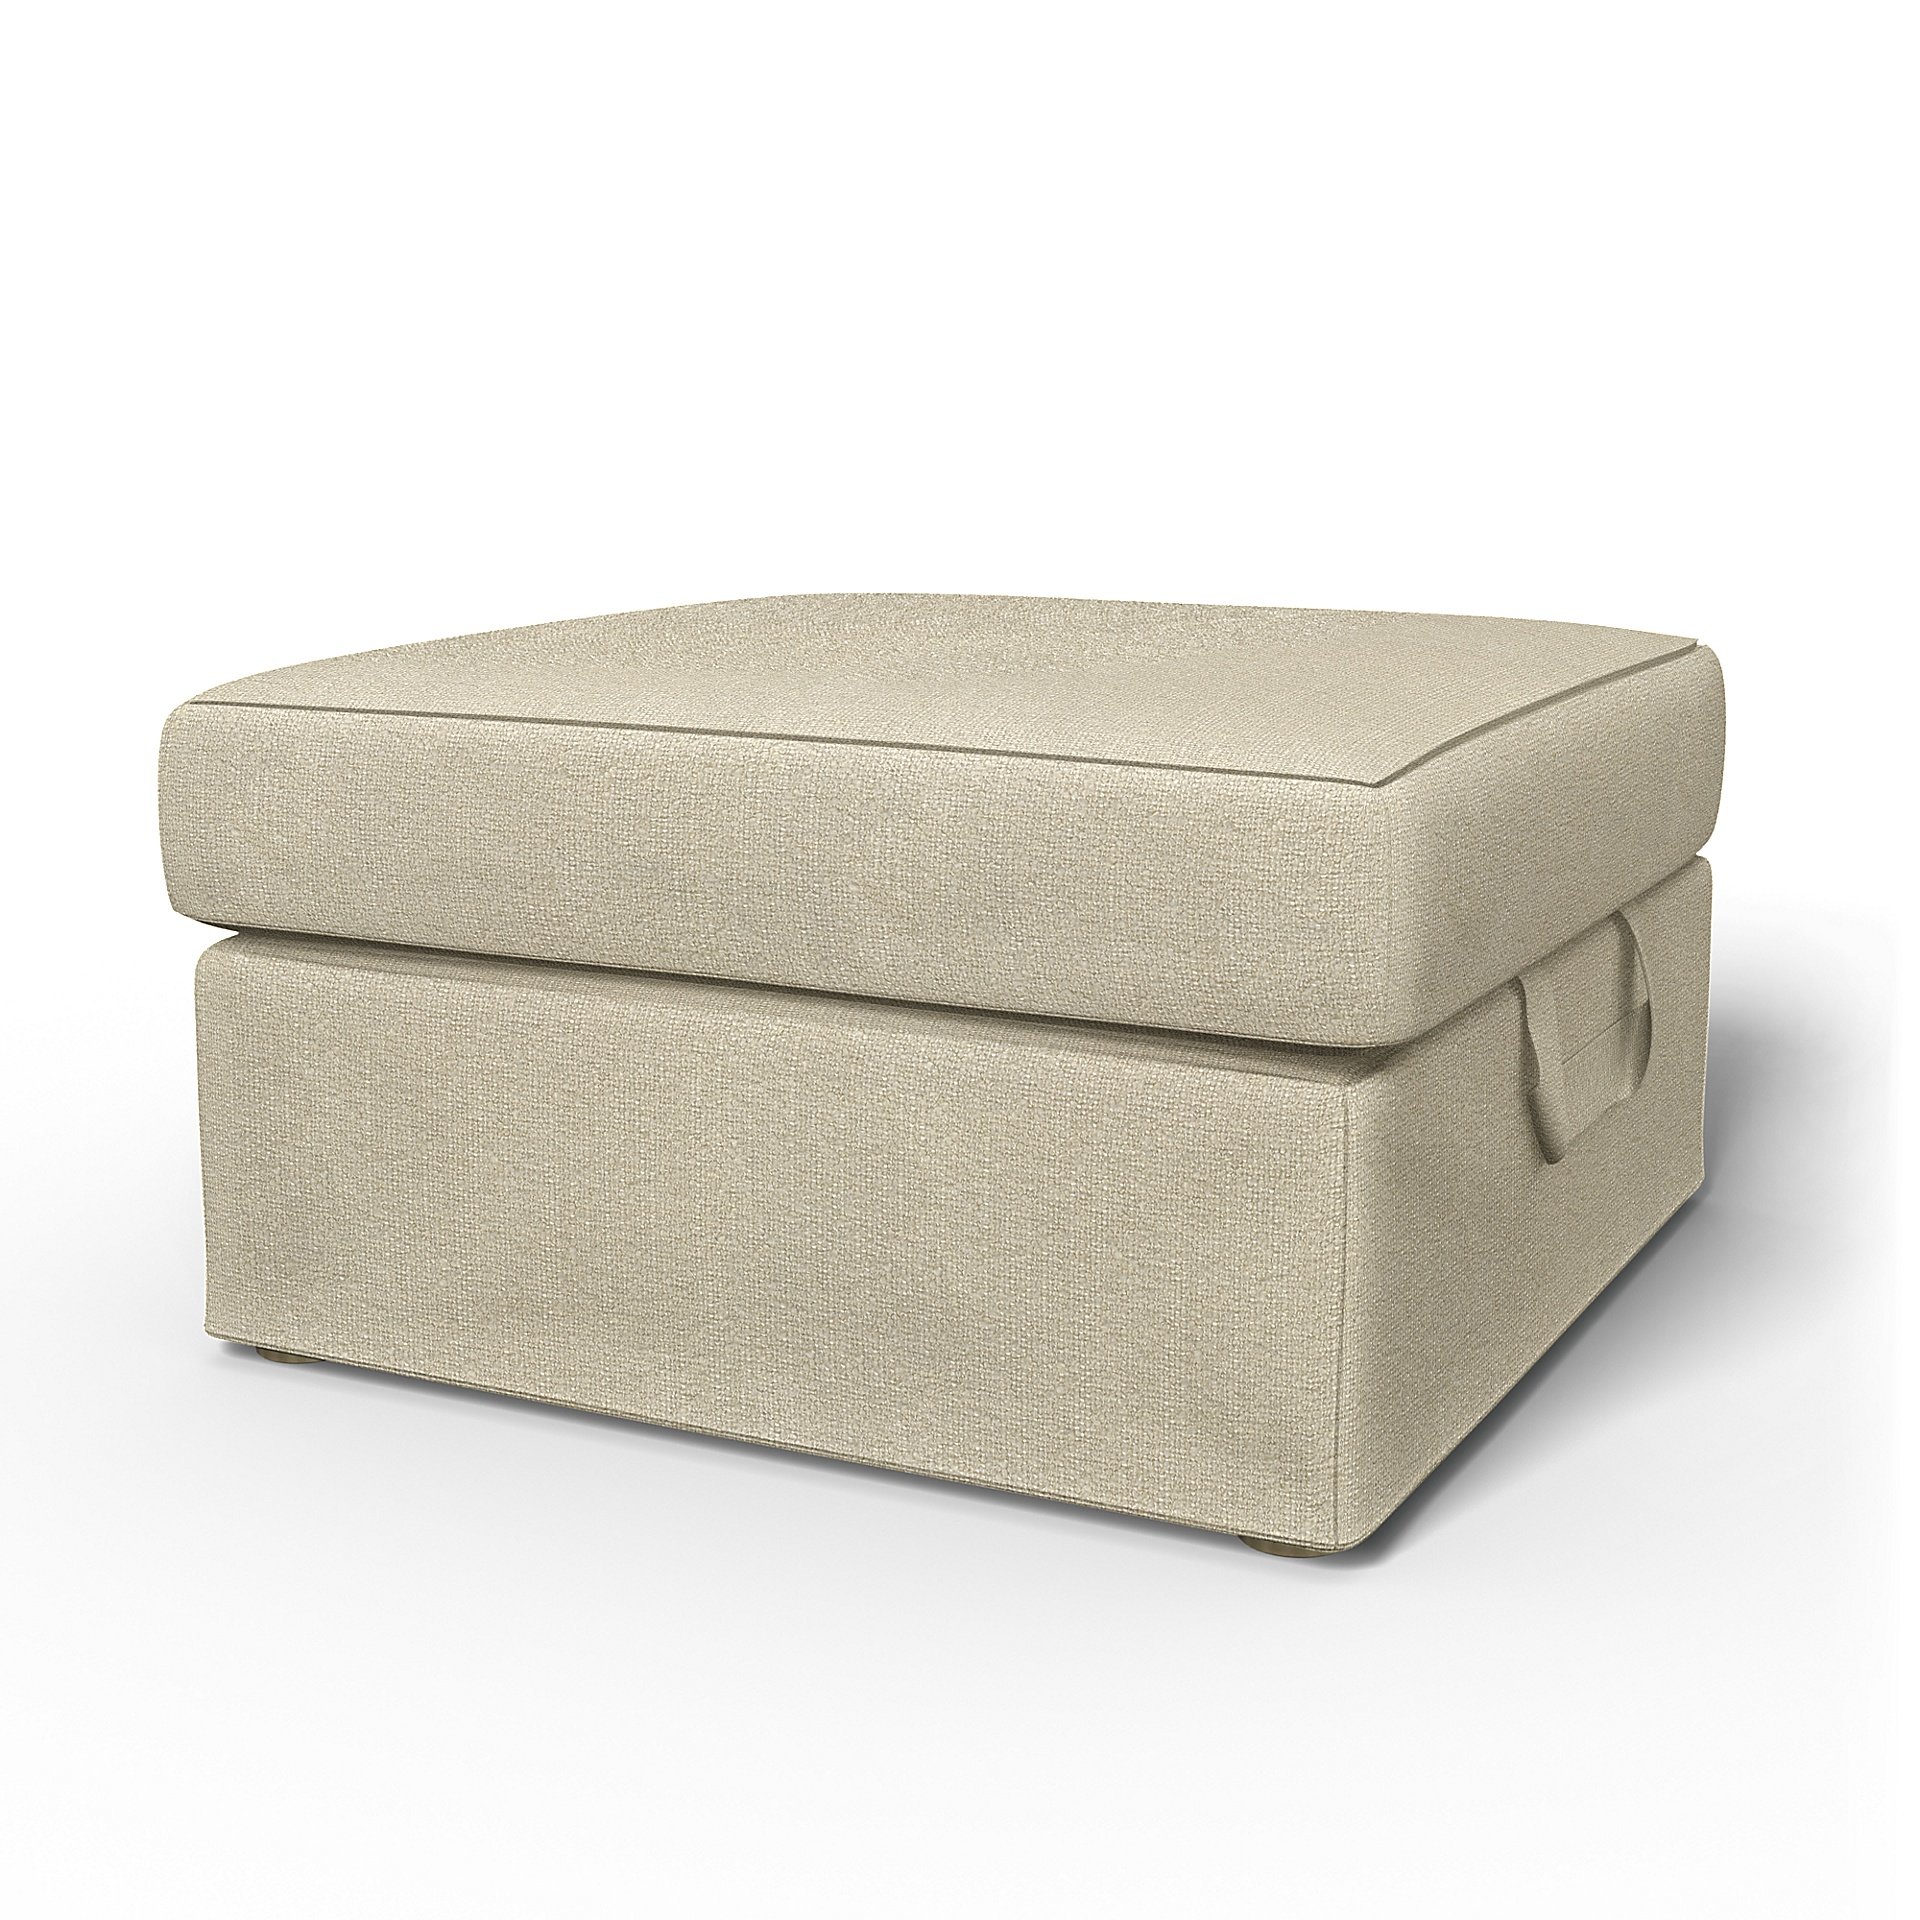 IKEA - Tomelilla Foto Footstool Cover, Cream, Boucle & Texture - Bemz